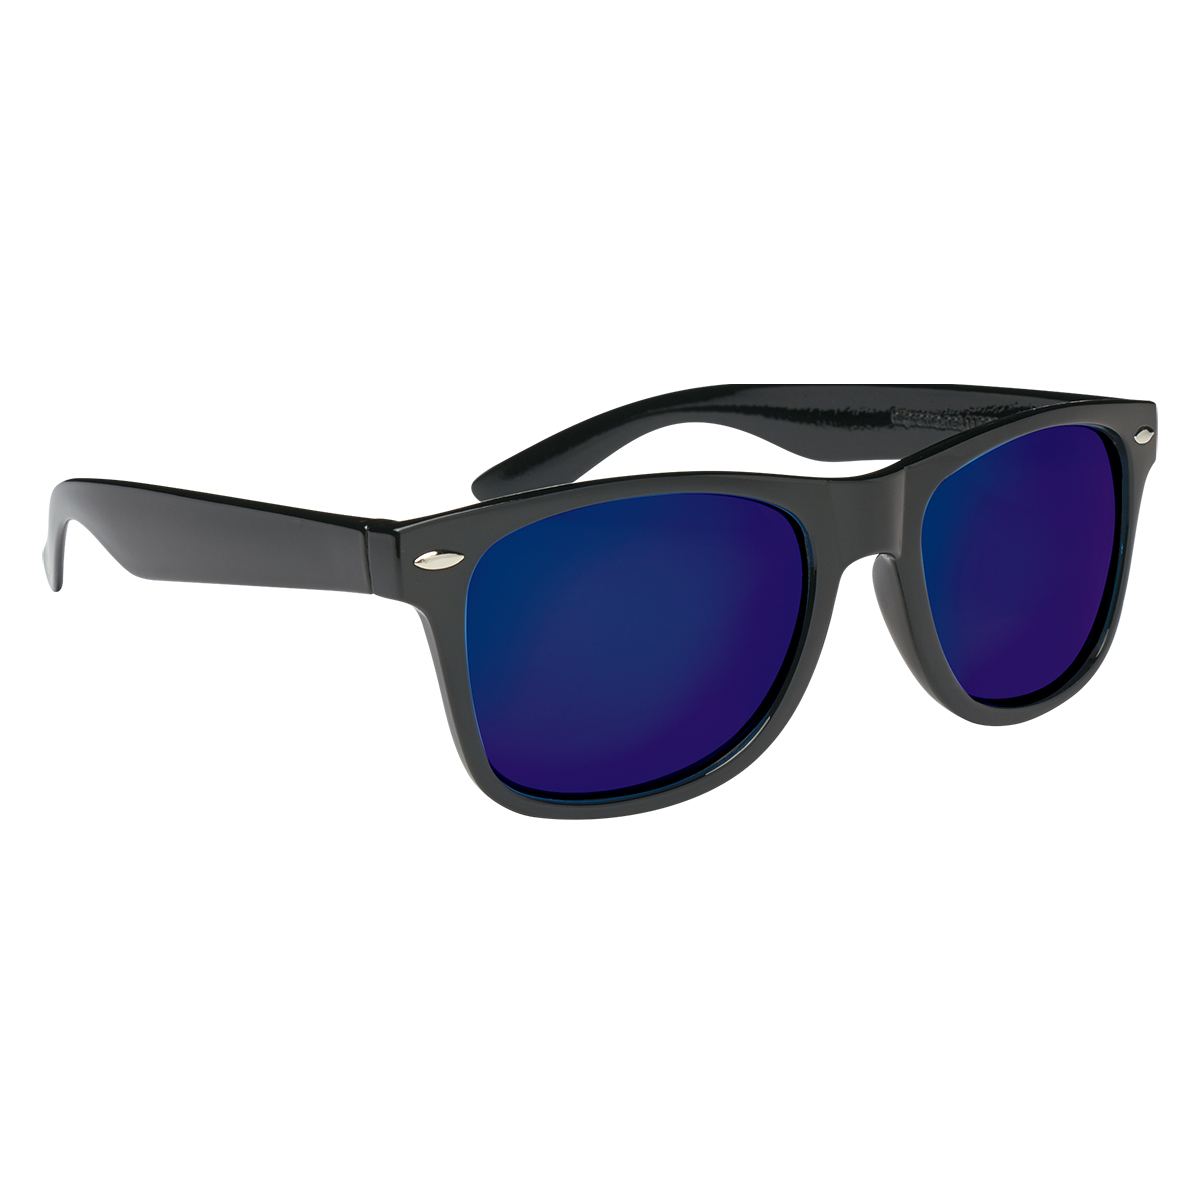 #6203 Mirrored Malibu Sunglasses - Hit Promotional Products